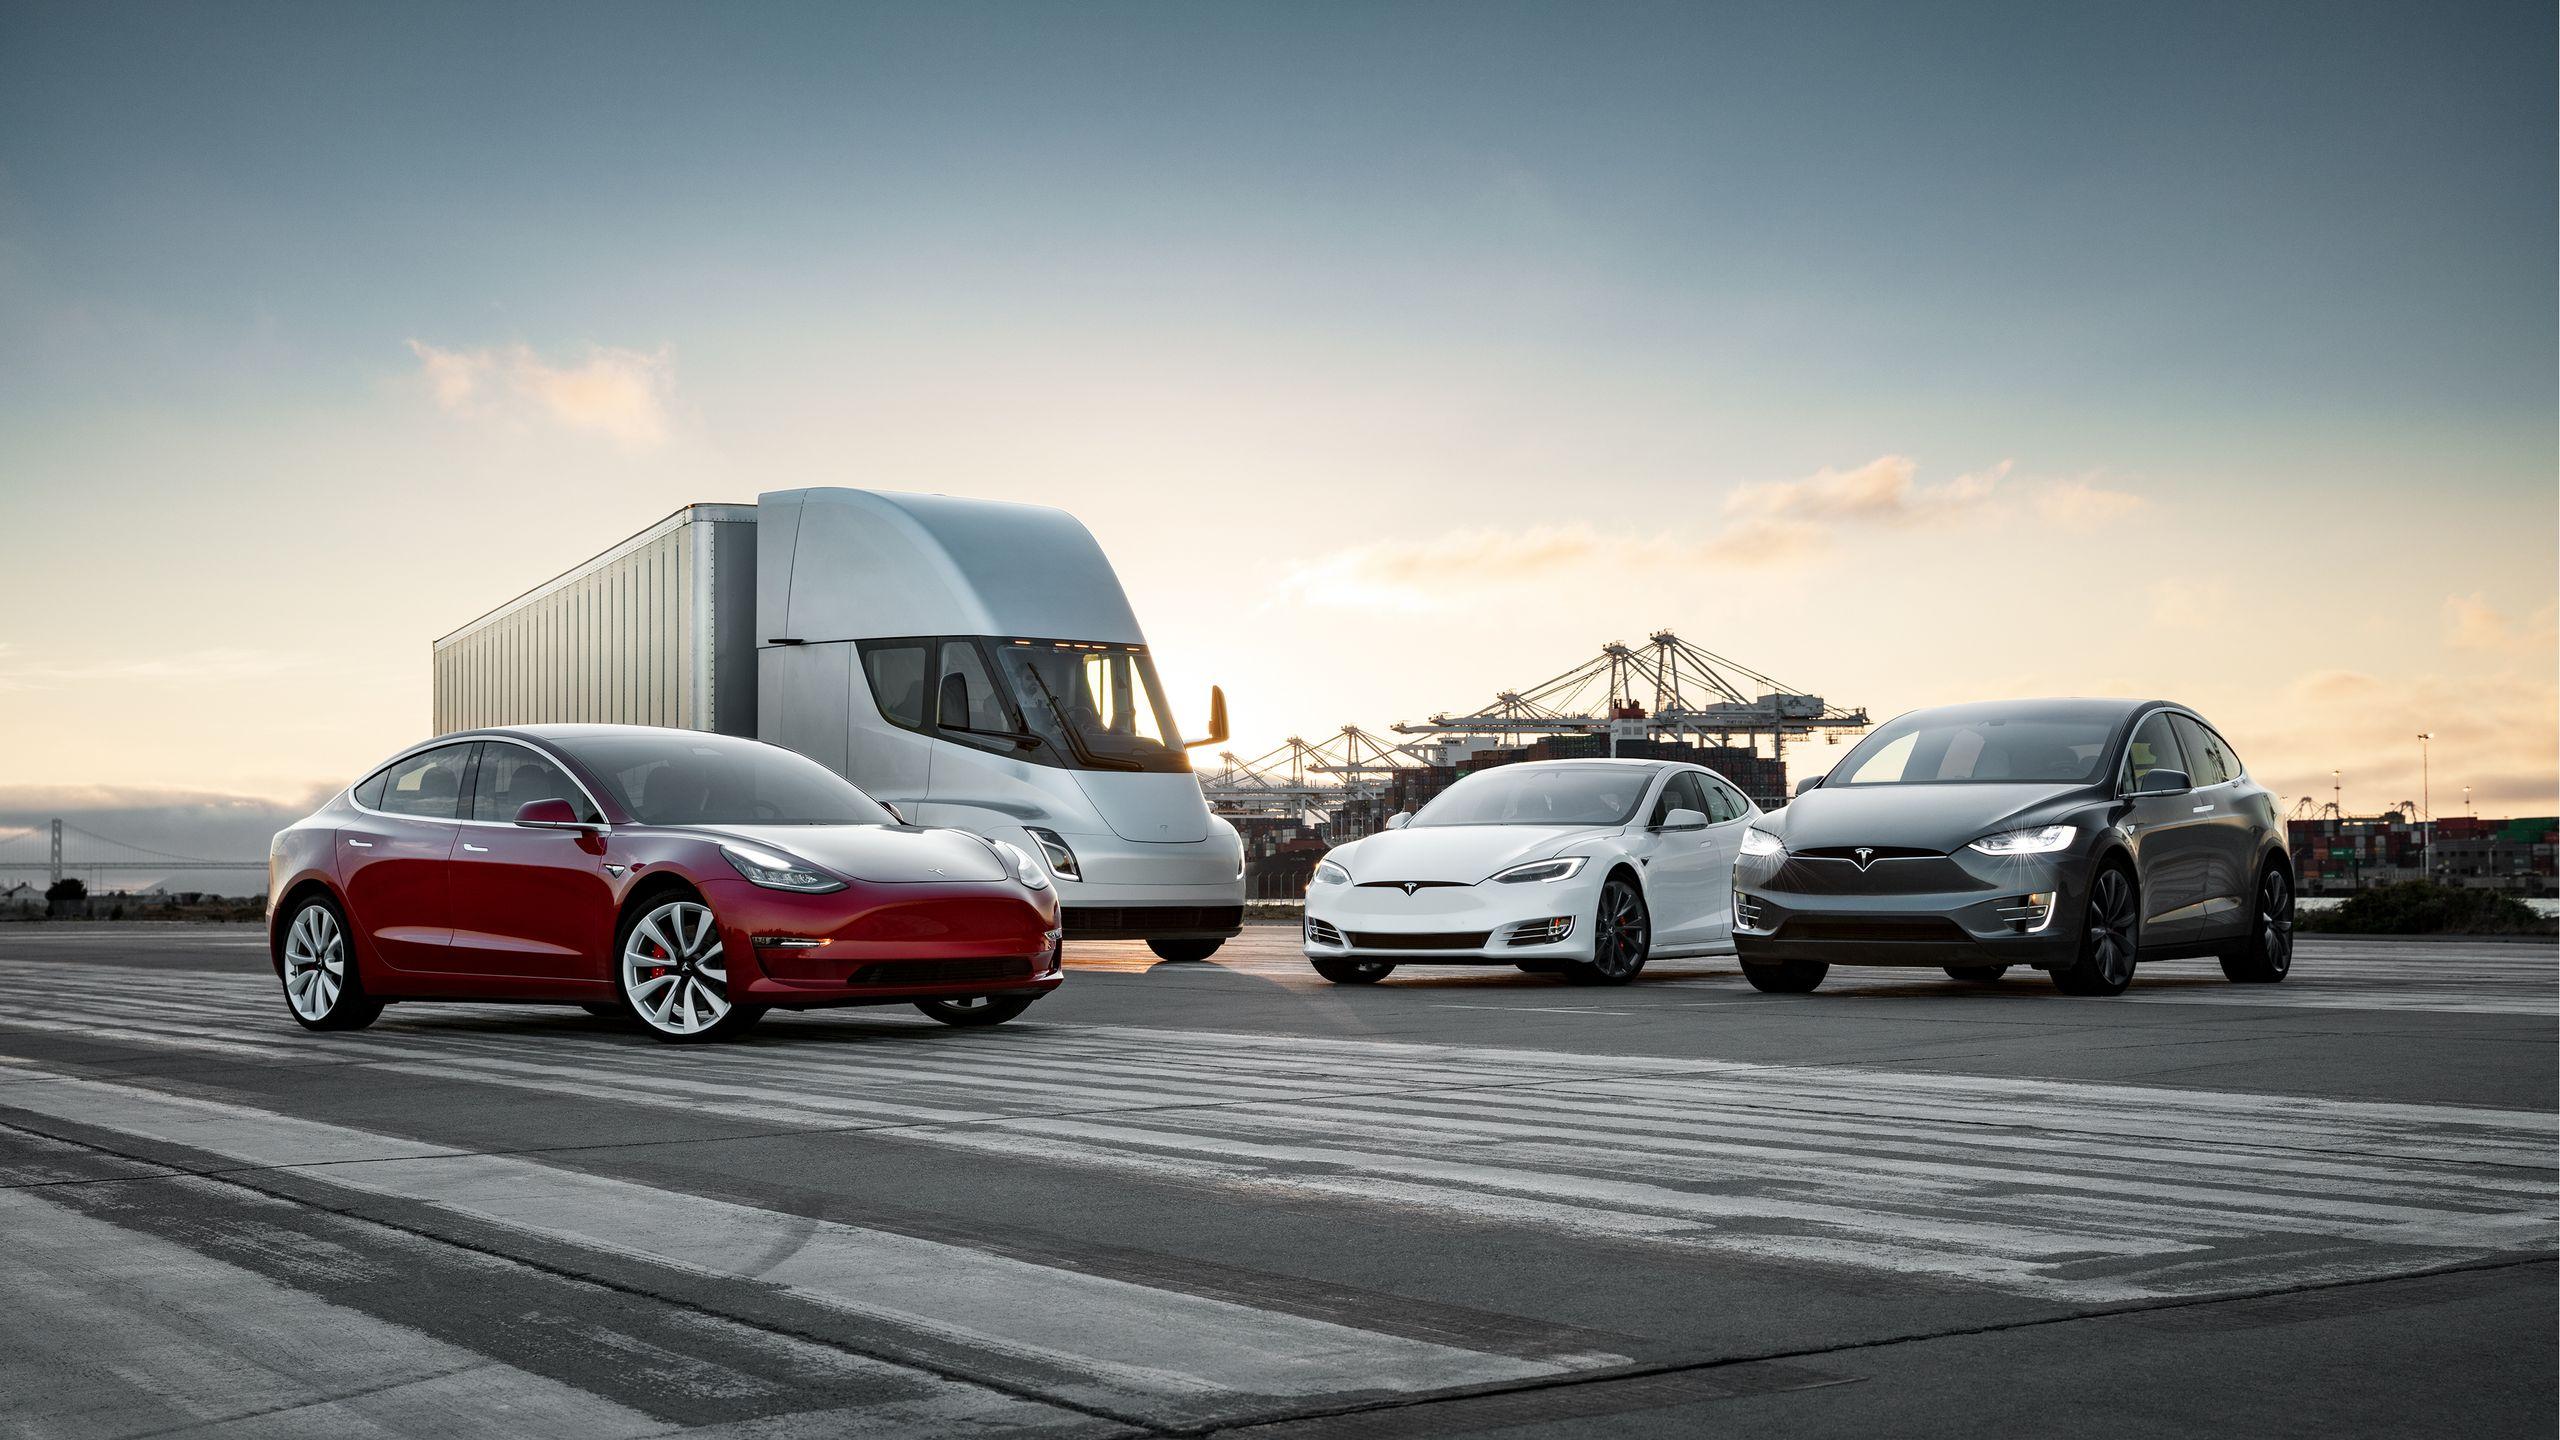 Free download Tesla Model S 3 X And Semi Unite In New Photo